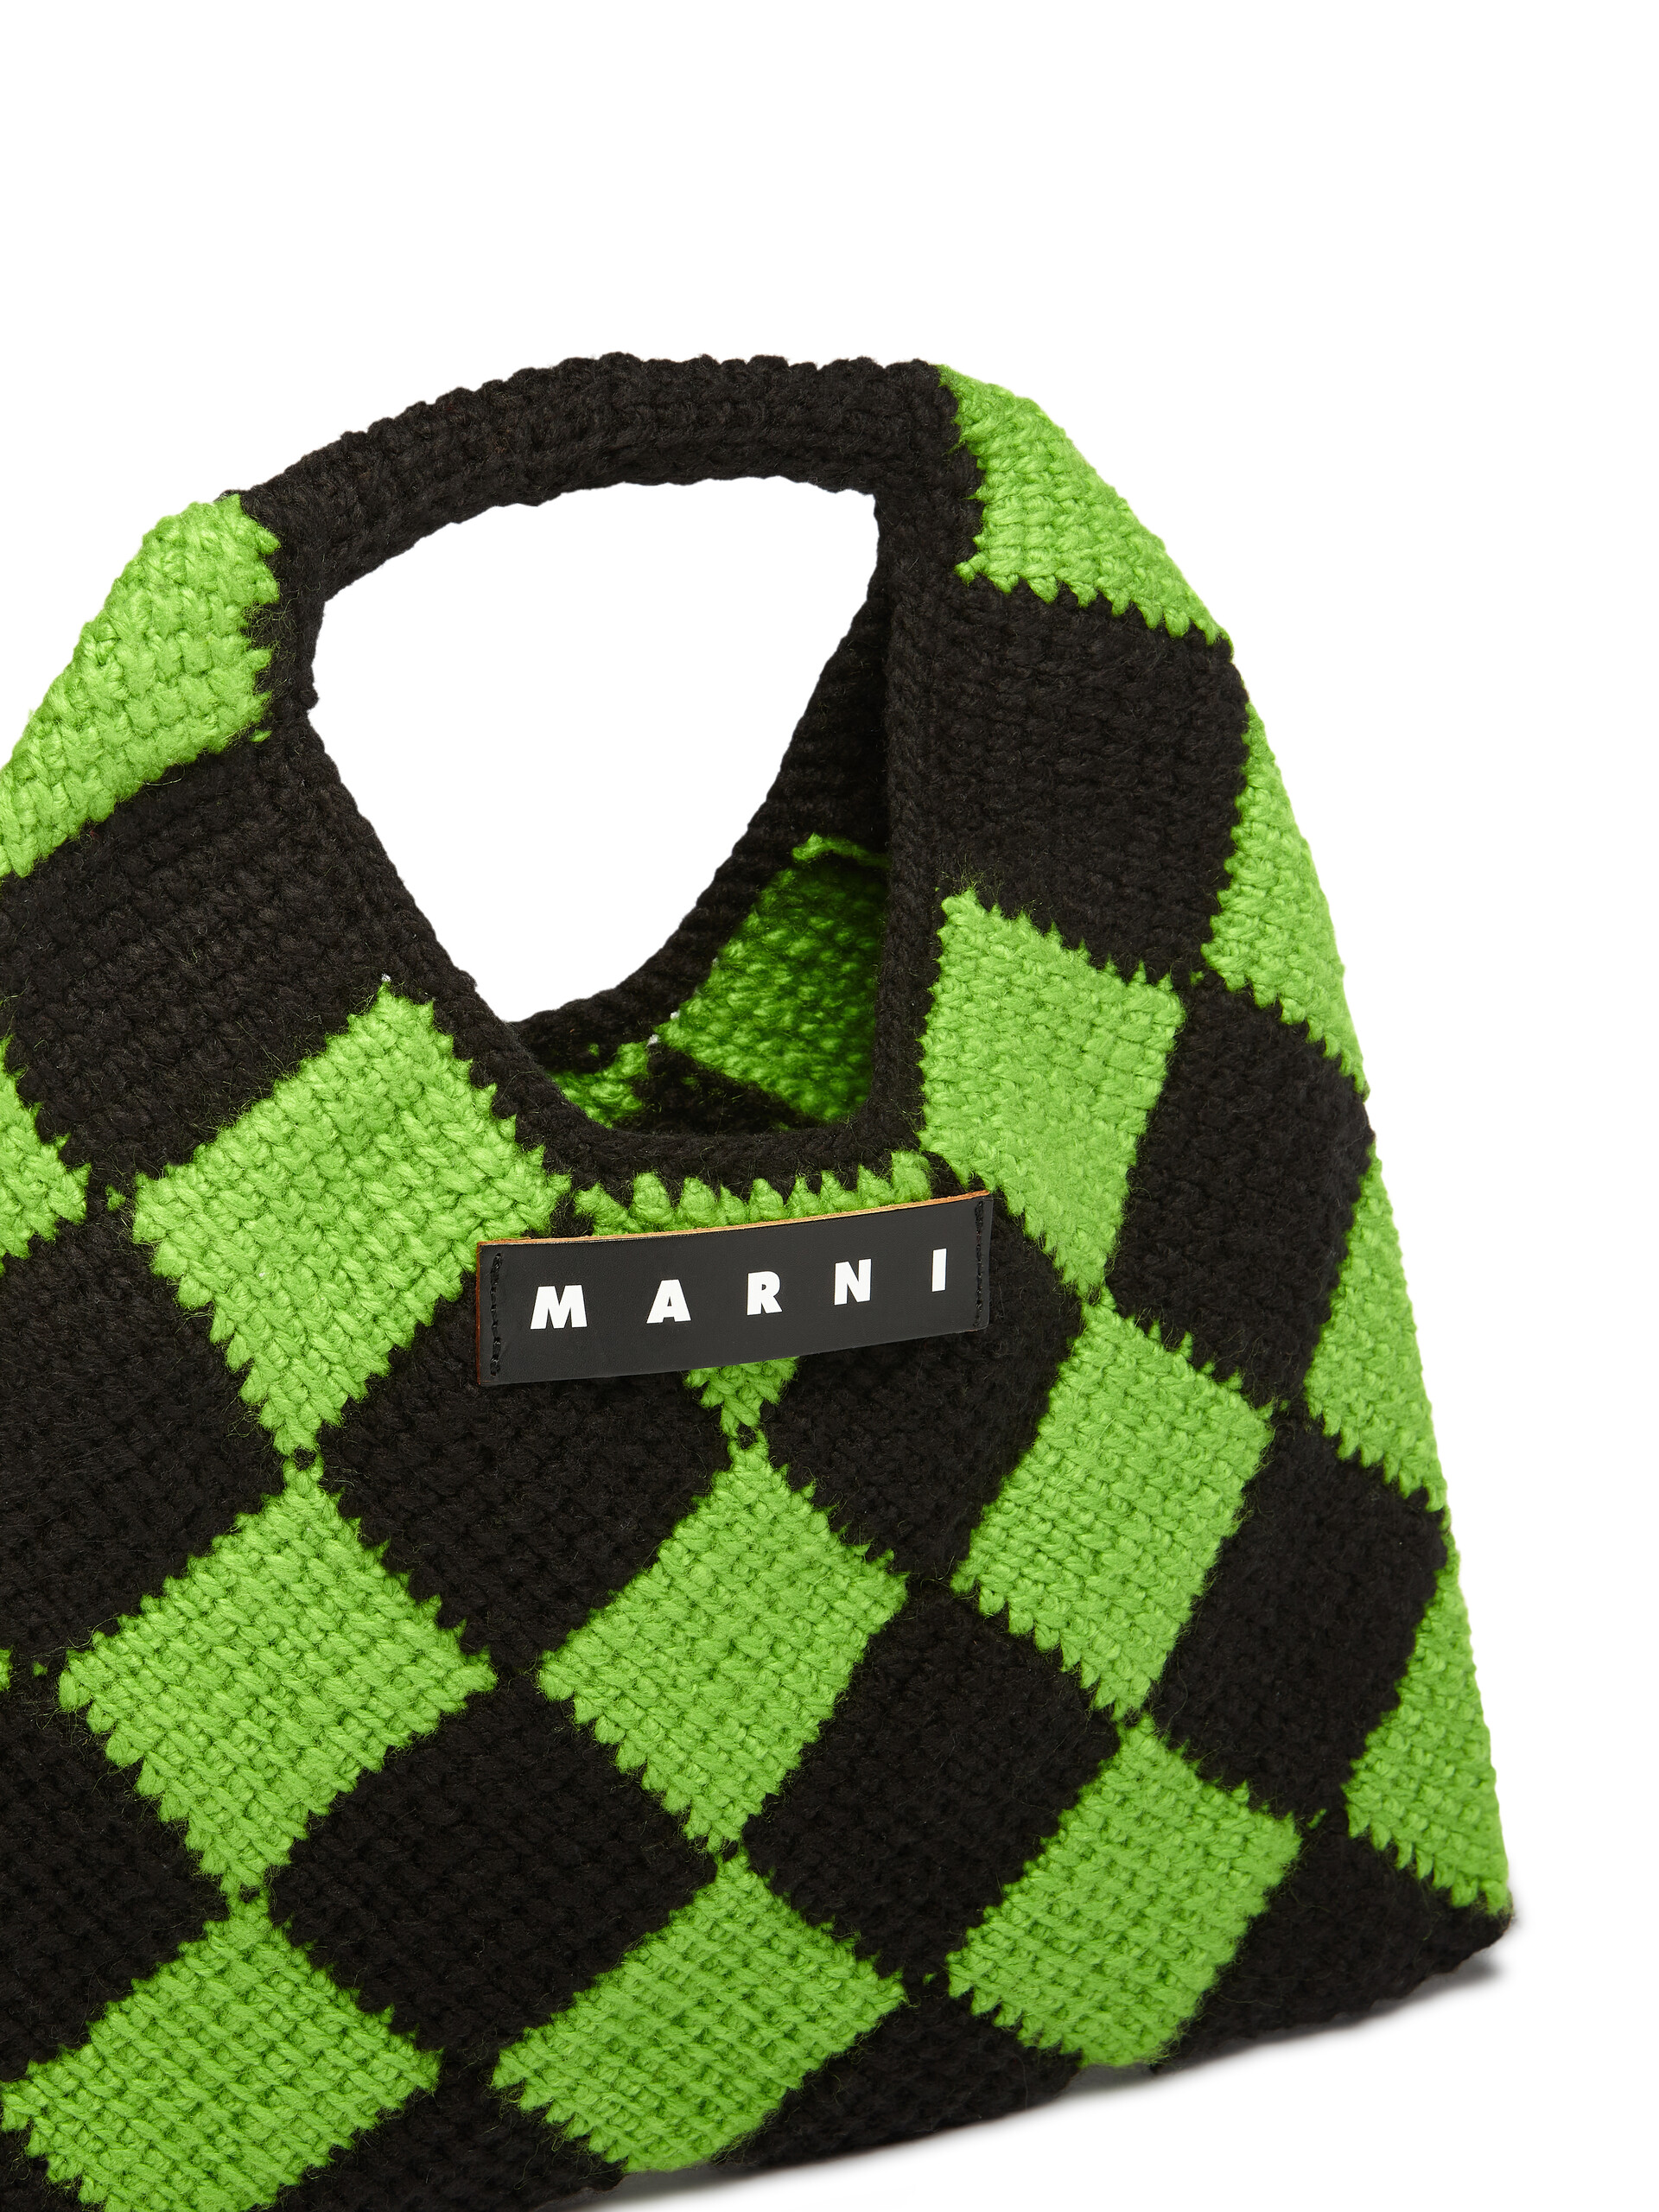 MARNI MARKET DIAMOND medium bag in green and black tech wool - Bags - Image 4